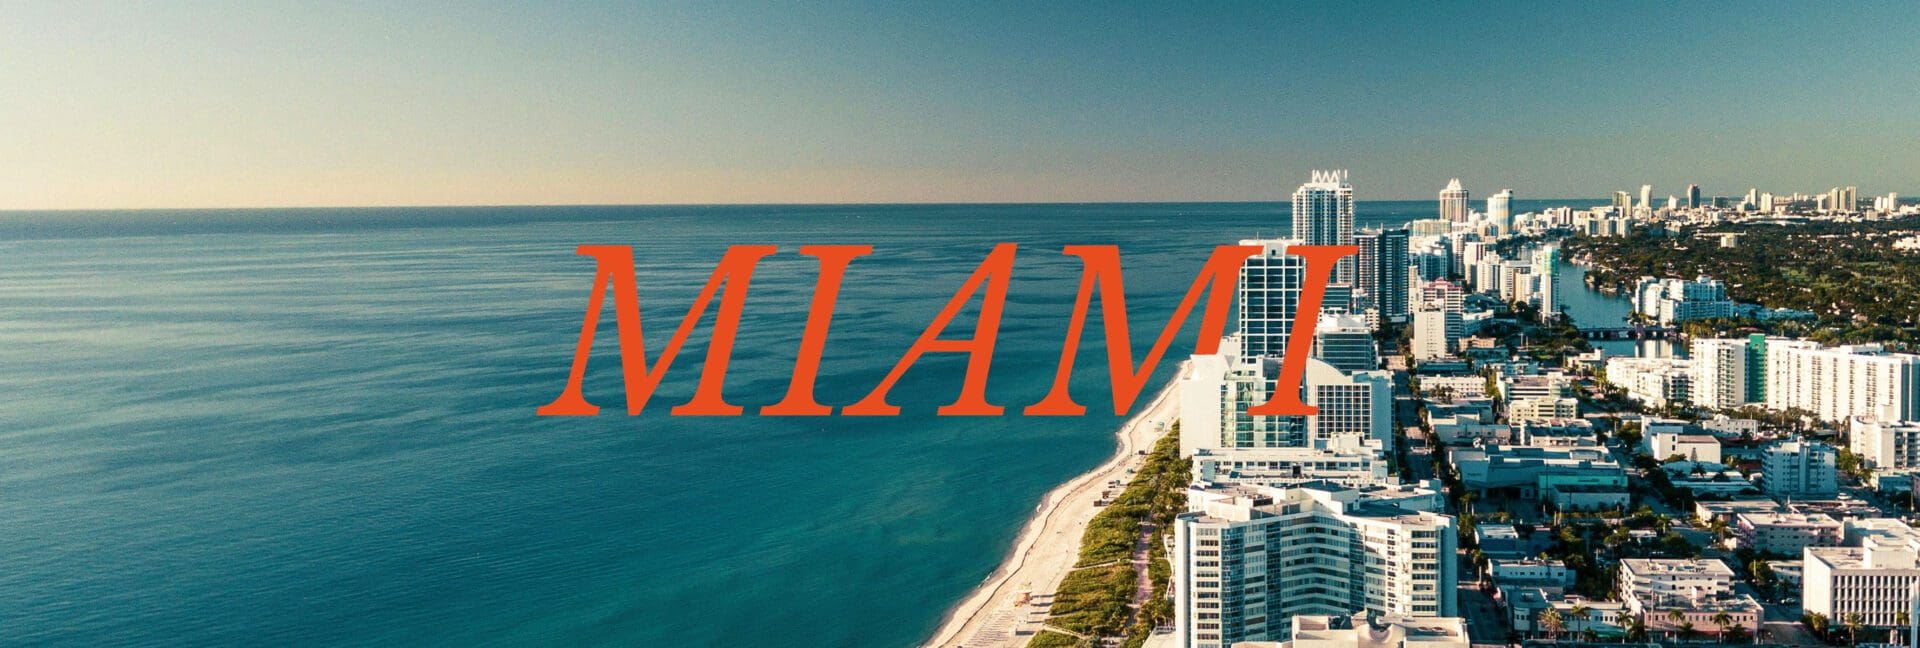 Miami datenight ideas heading banner